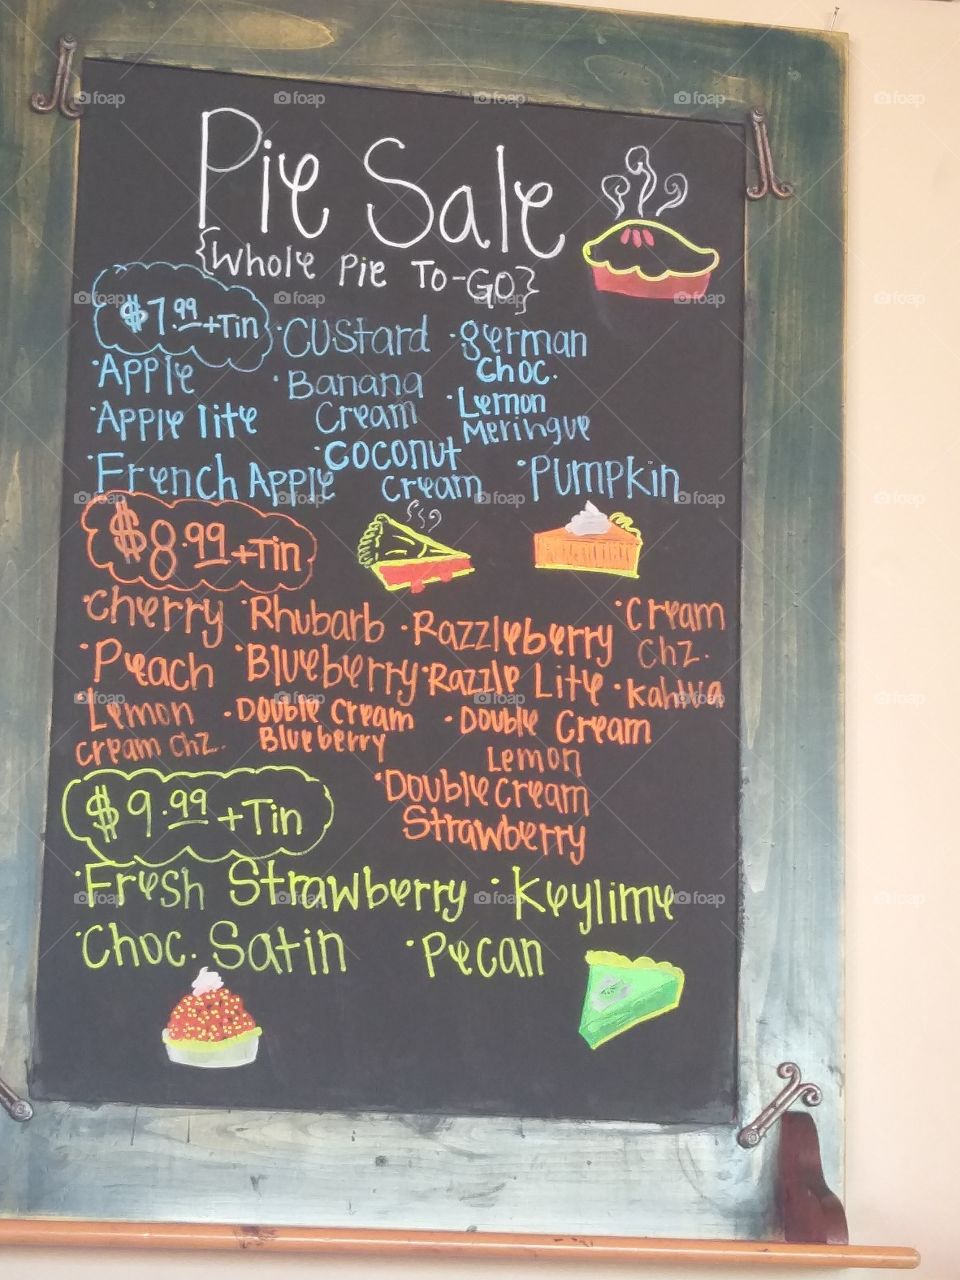 Pie flavors at Marie Callendars